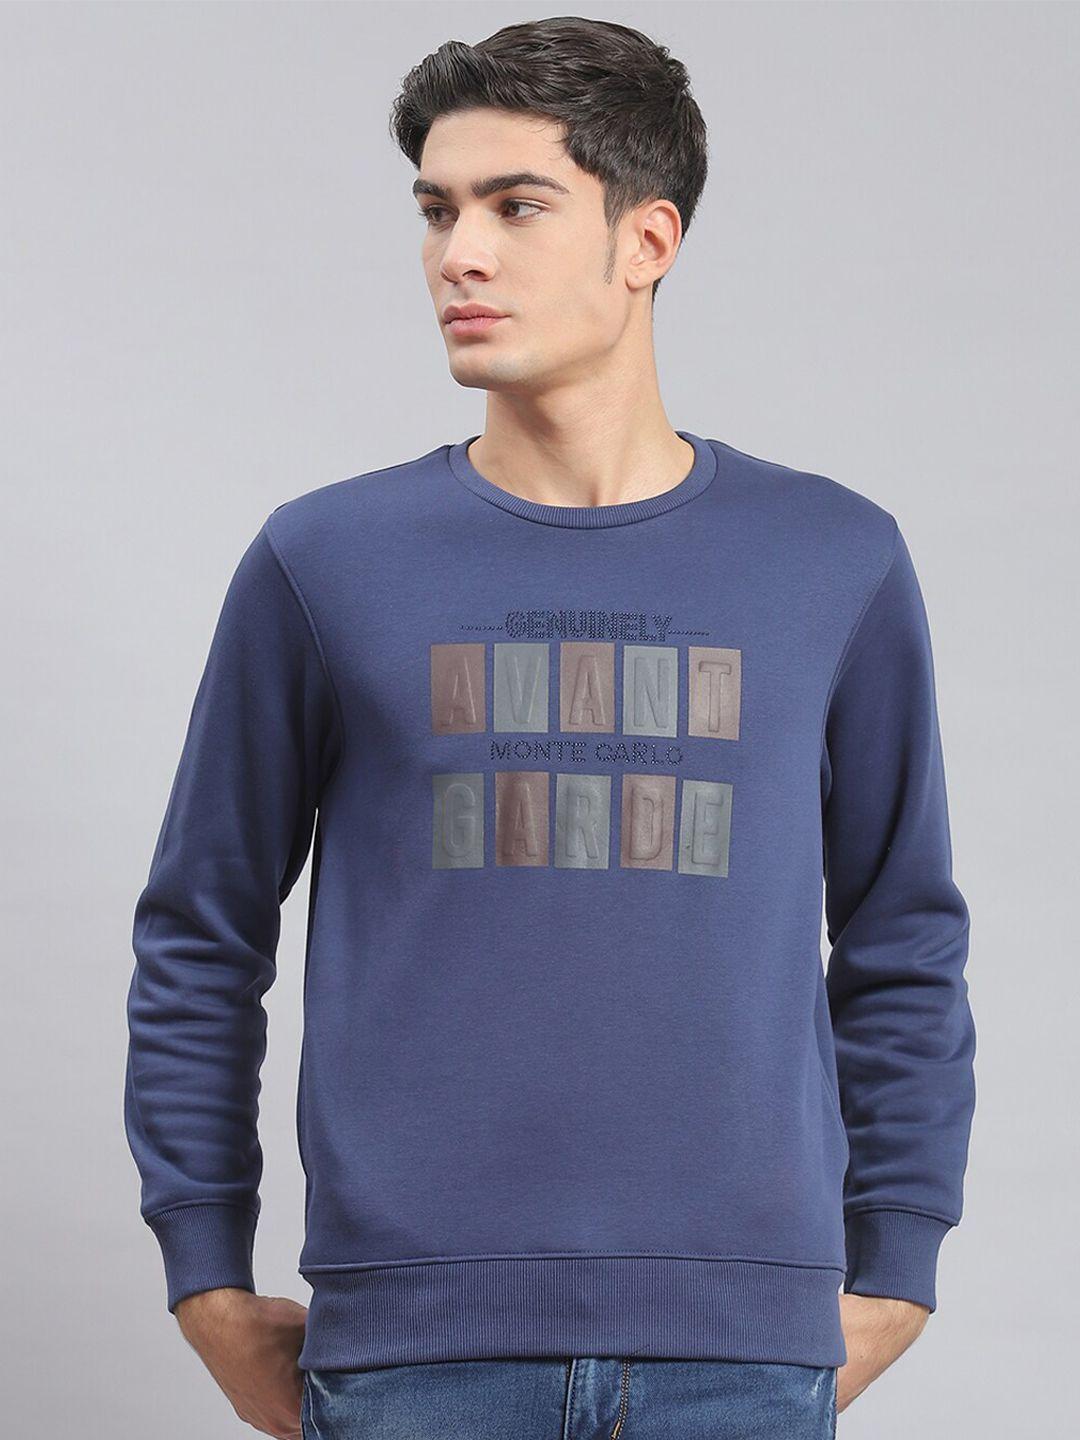 monte carlo typography printed round neck long sleeve pullover sweatshirt